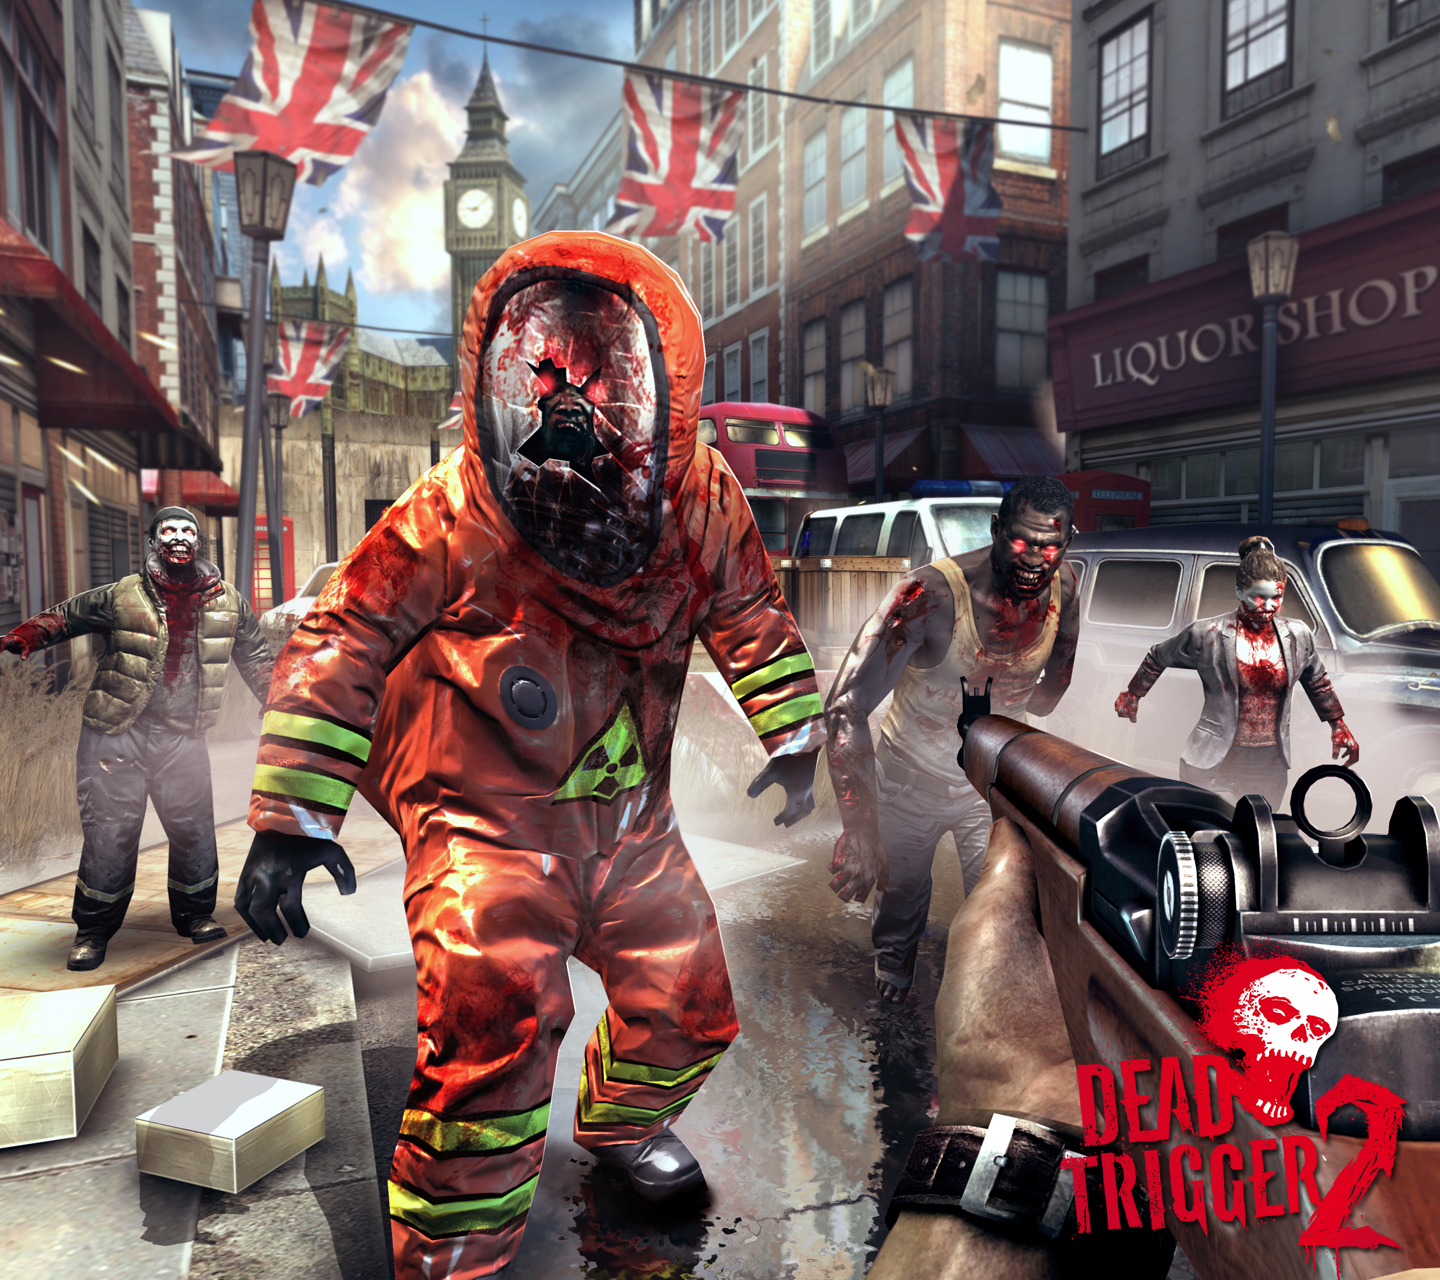 Dead Trigger 2 (2013) promotional art